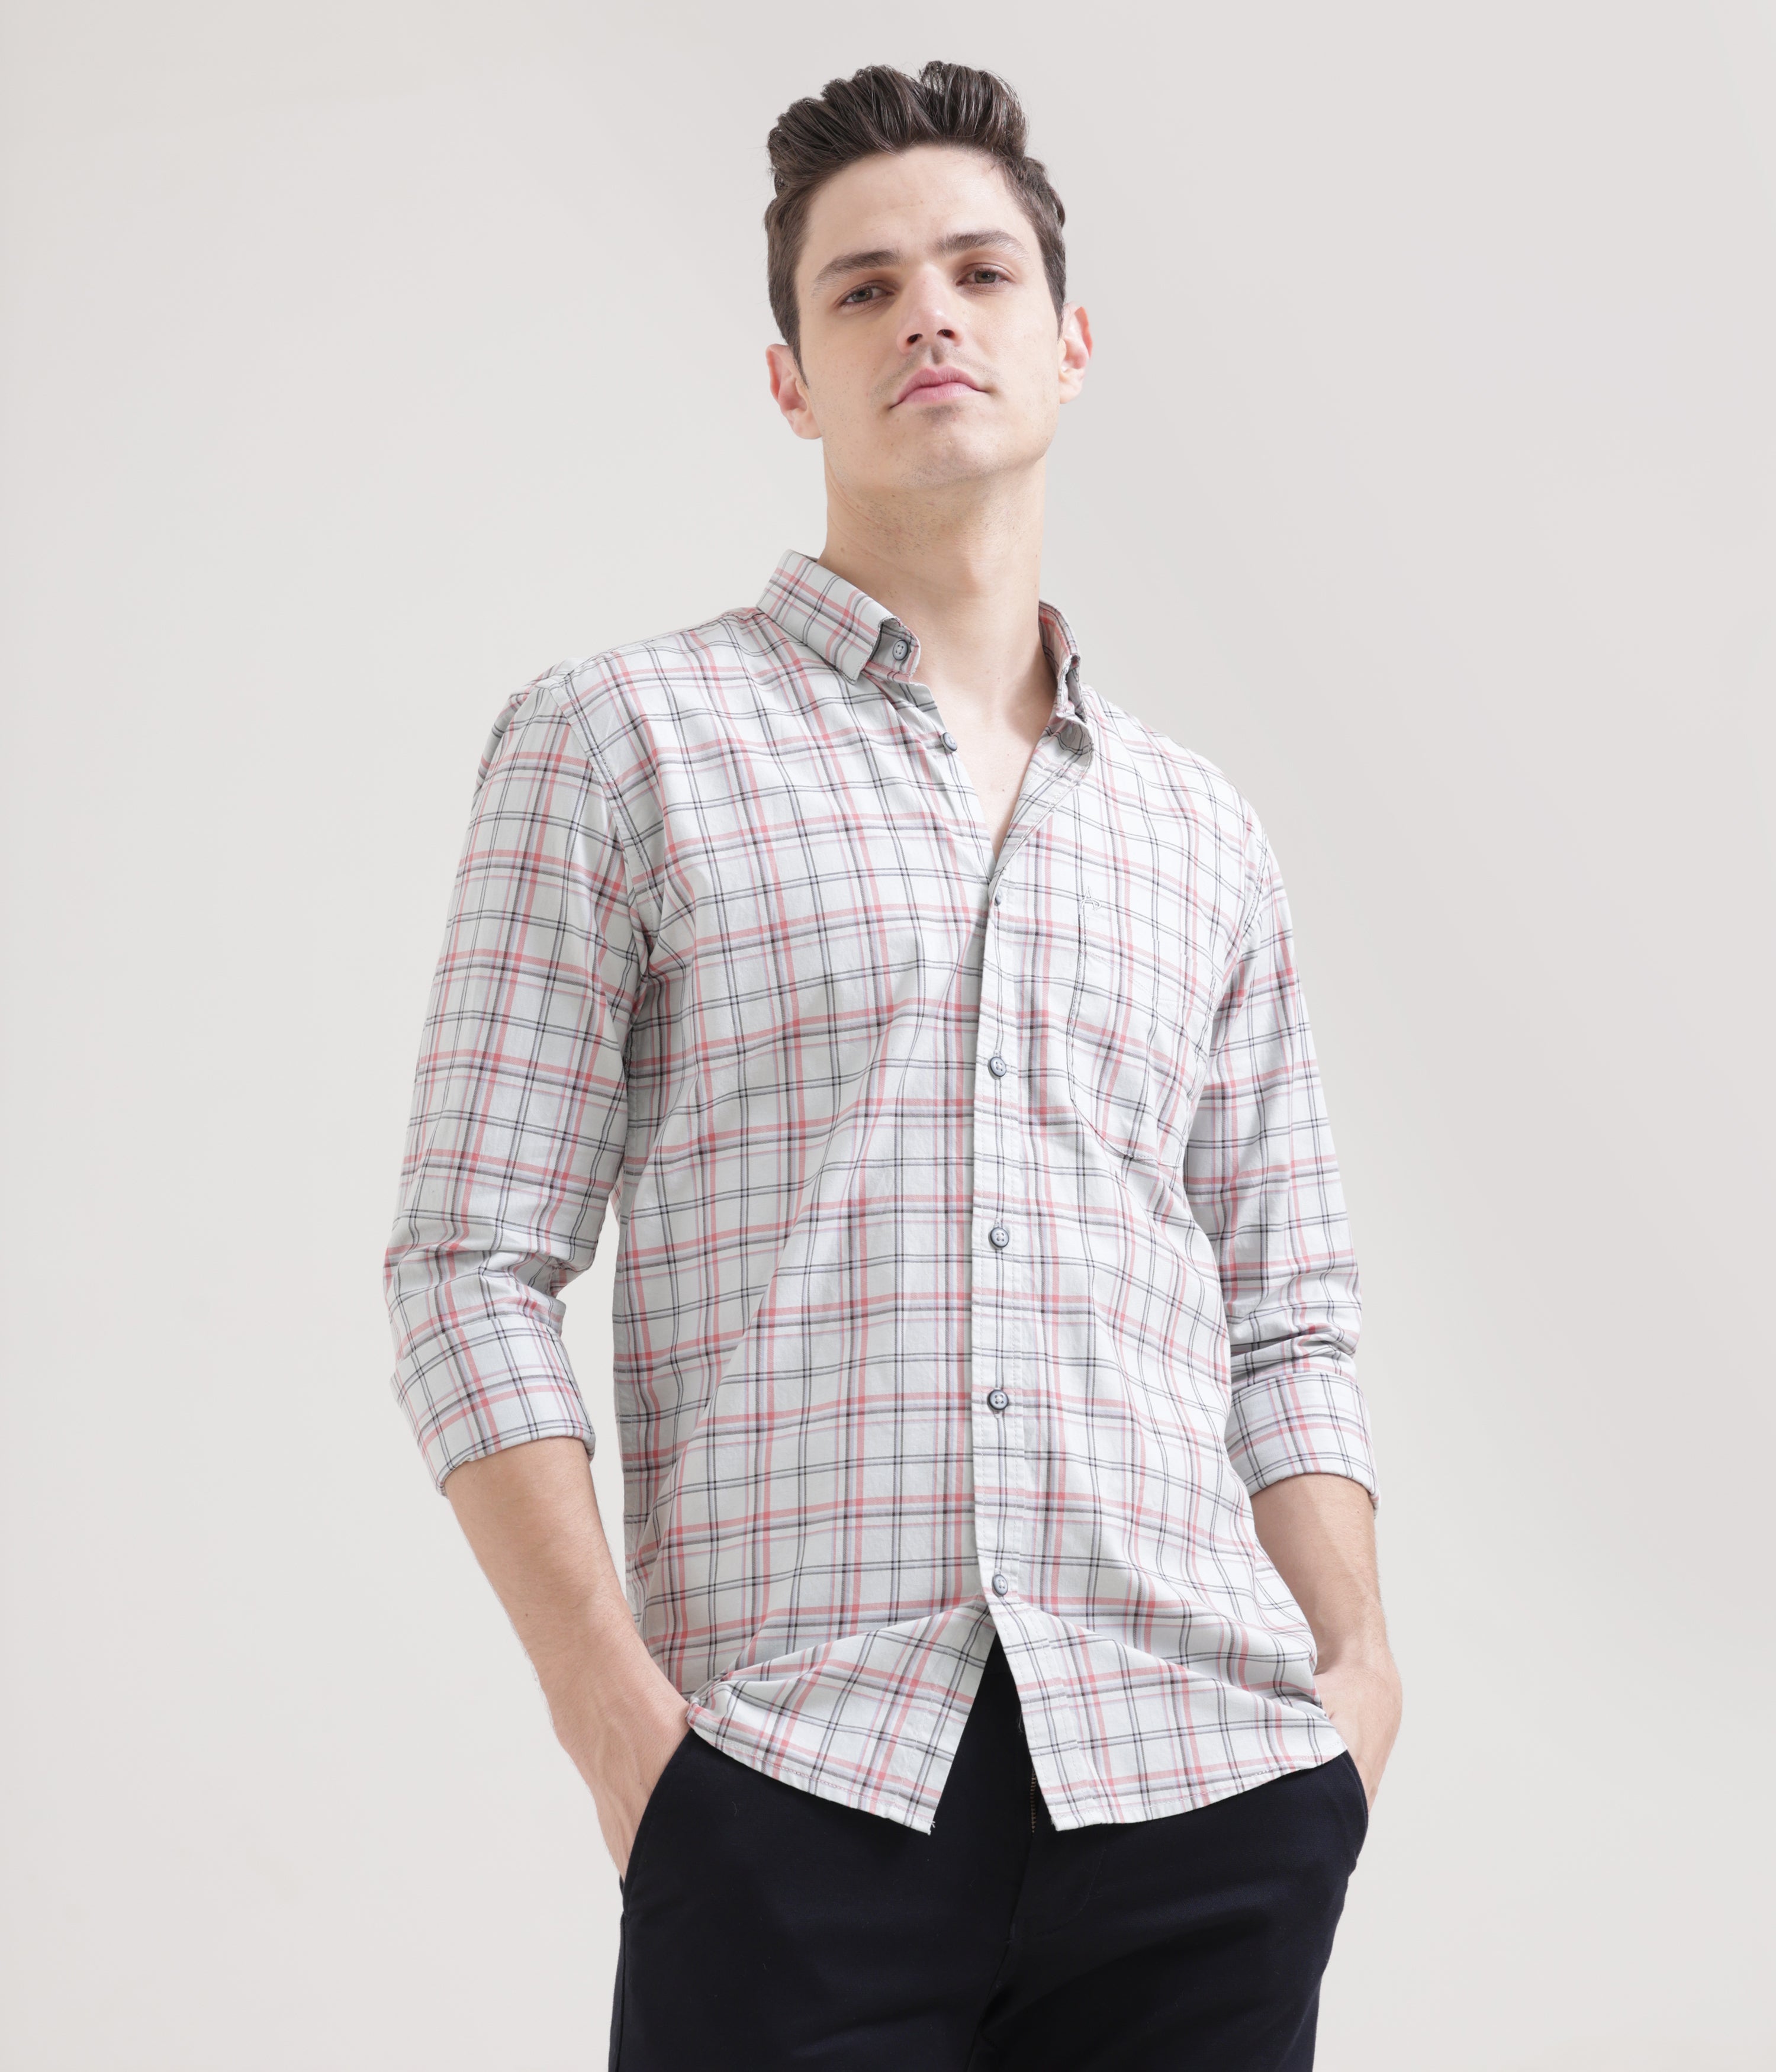 Sea Salt Slim Fit Shirt: Versatile Elegance